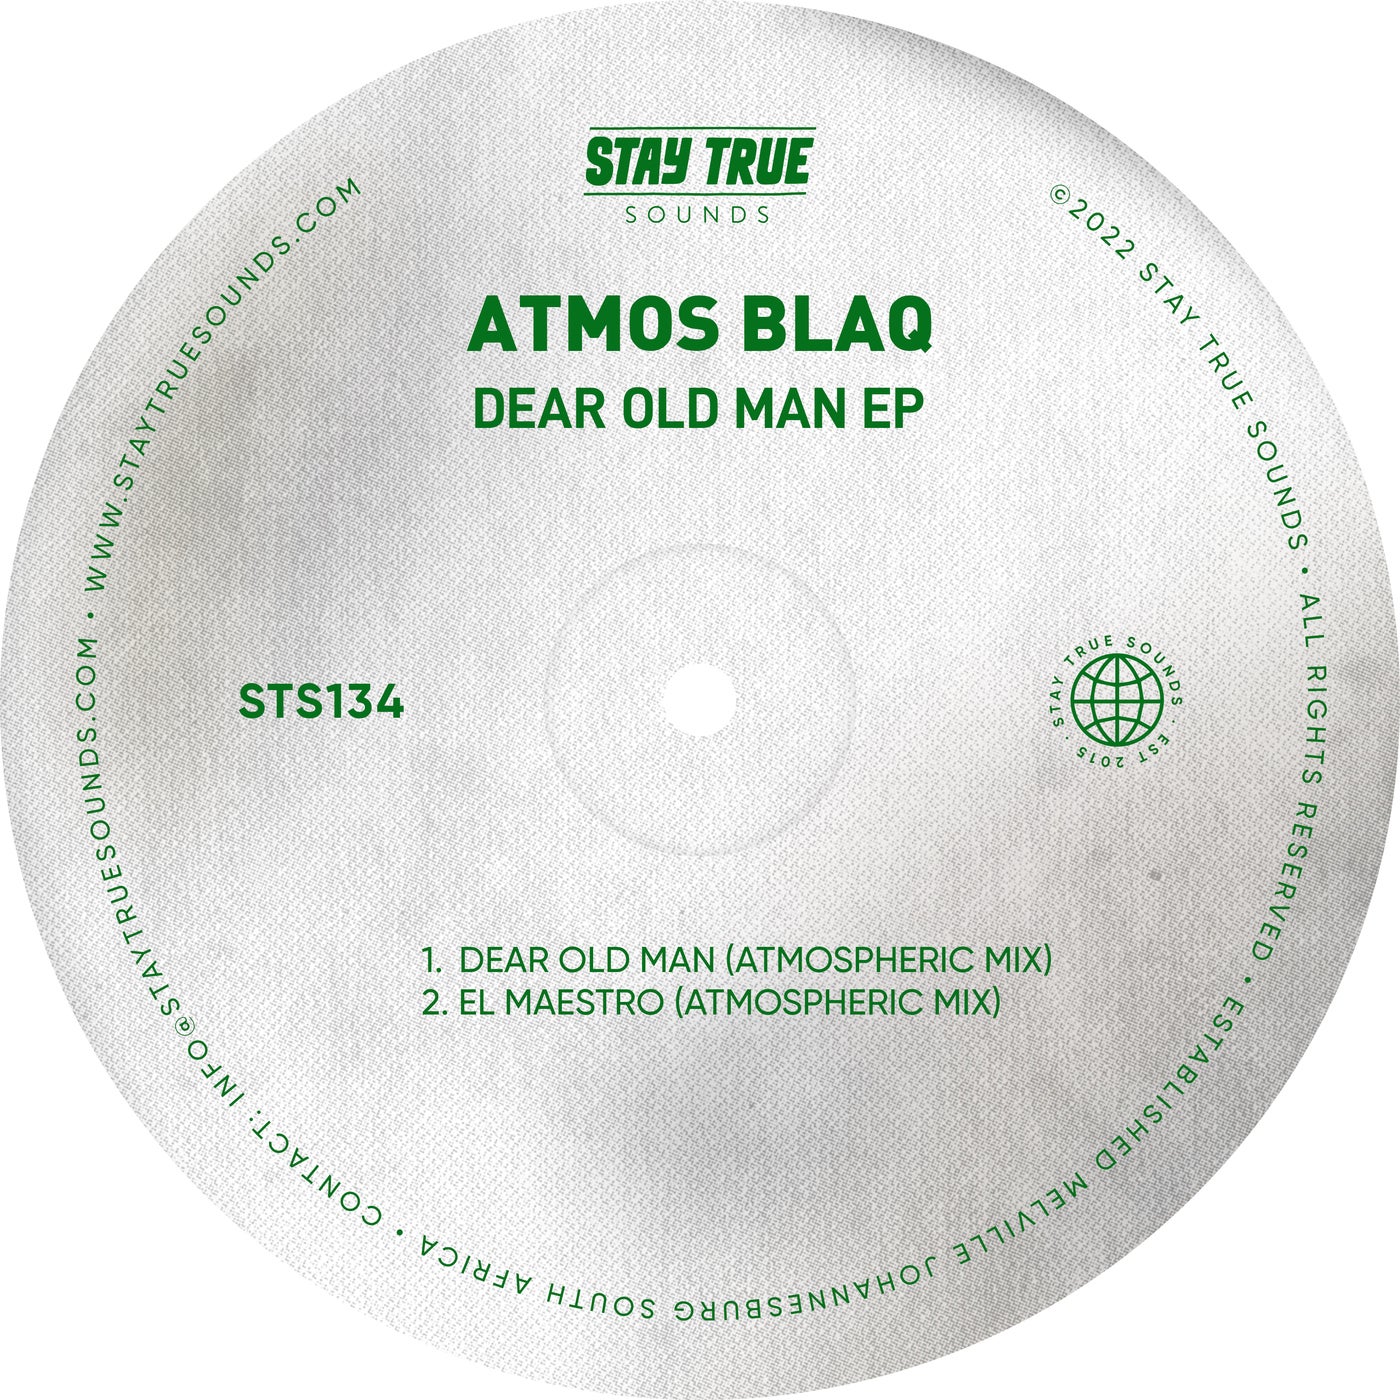 Atmos Blaq - Dear Old Man [Stay True Sounds]